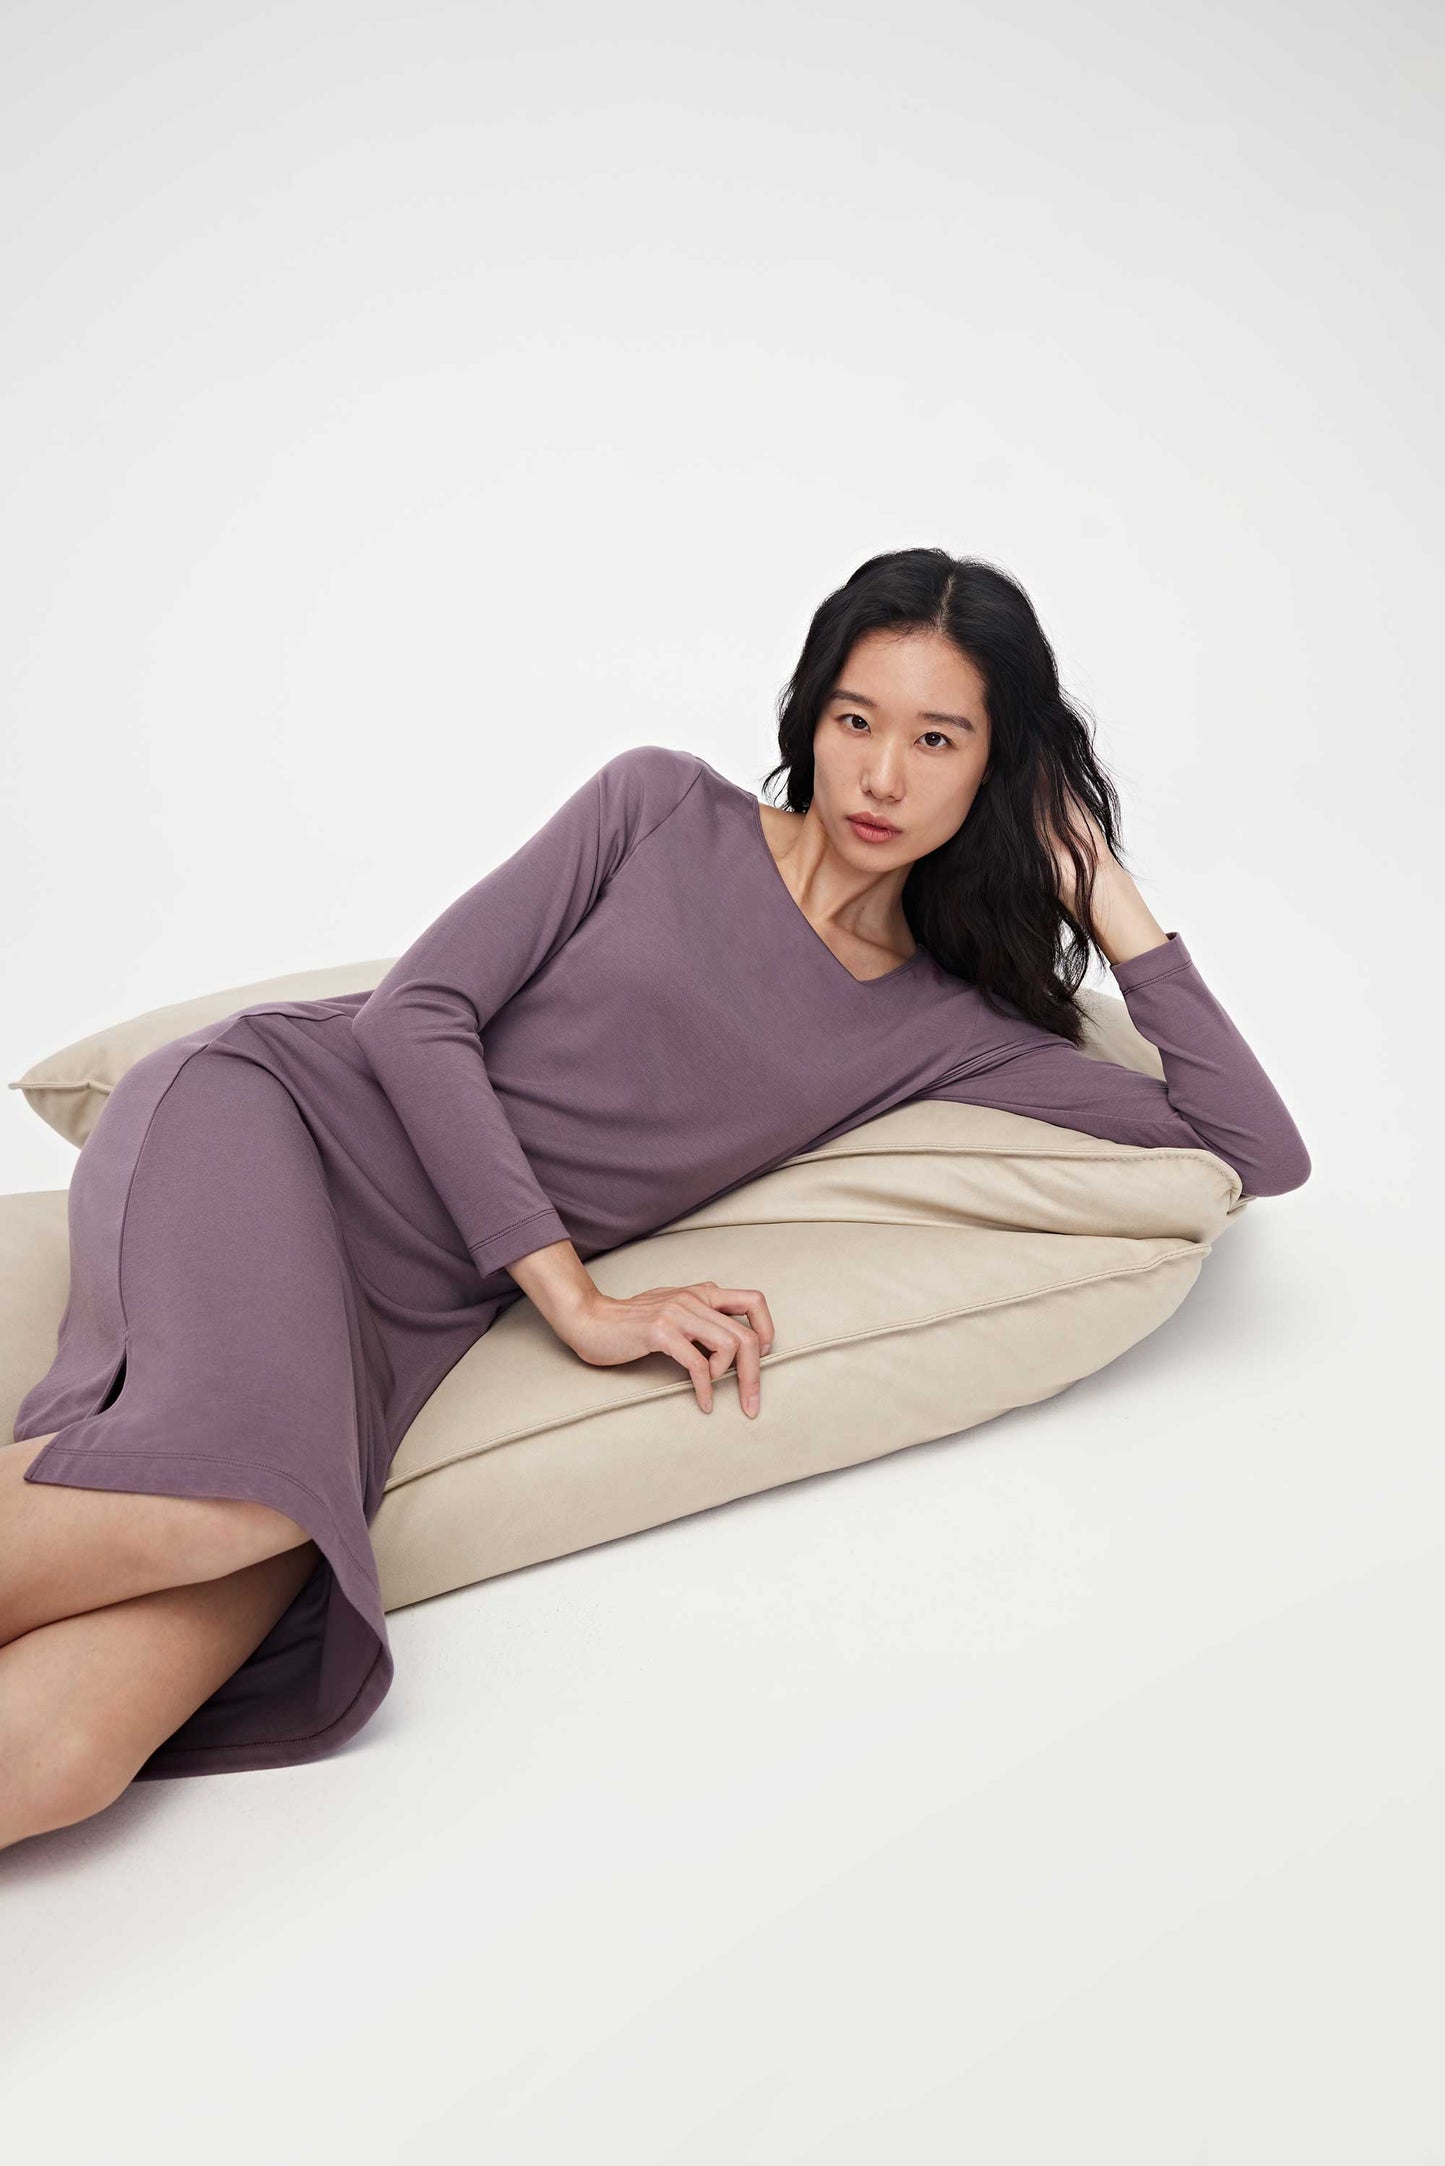 Woman wearing purple pajama dress and lying on her side on the sofa